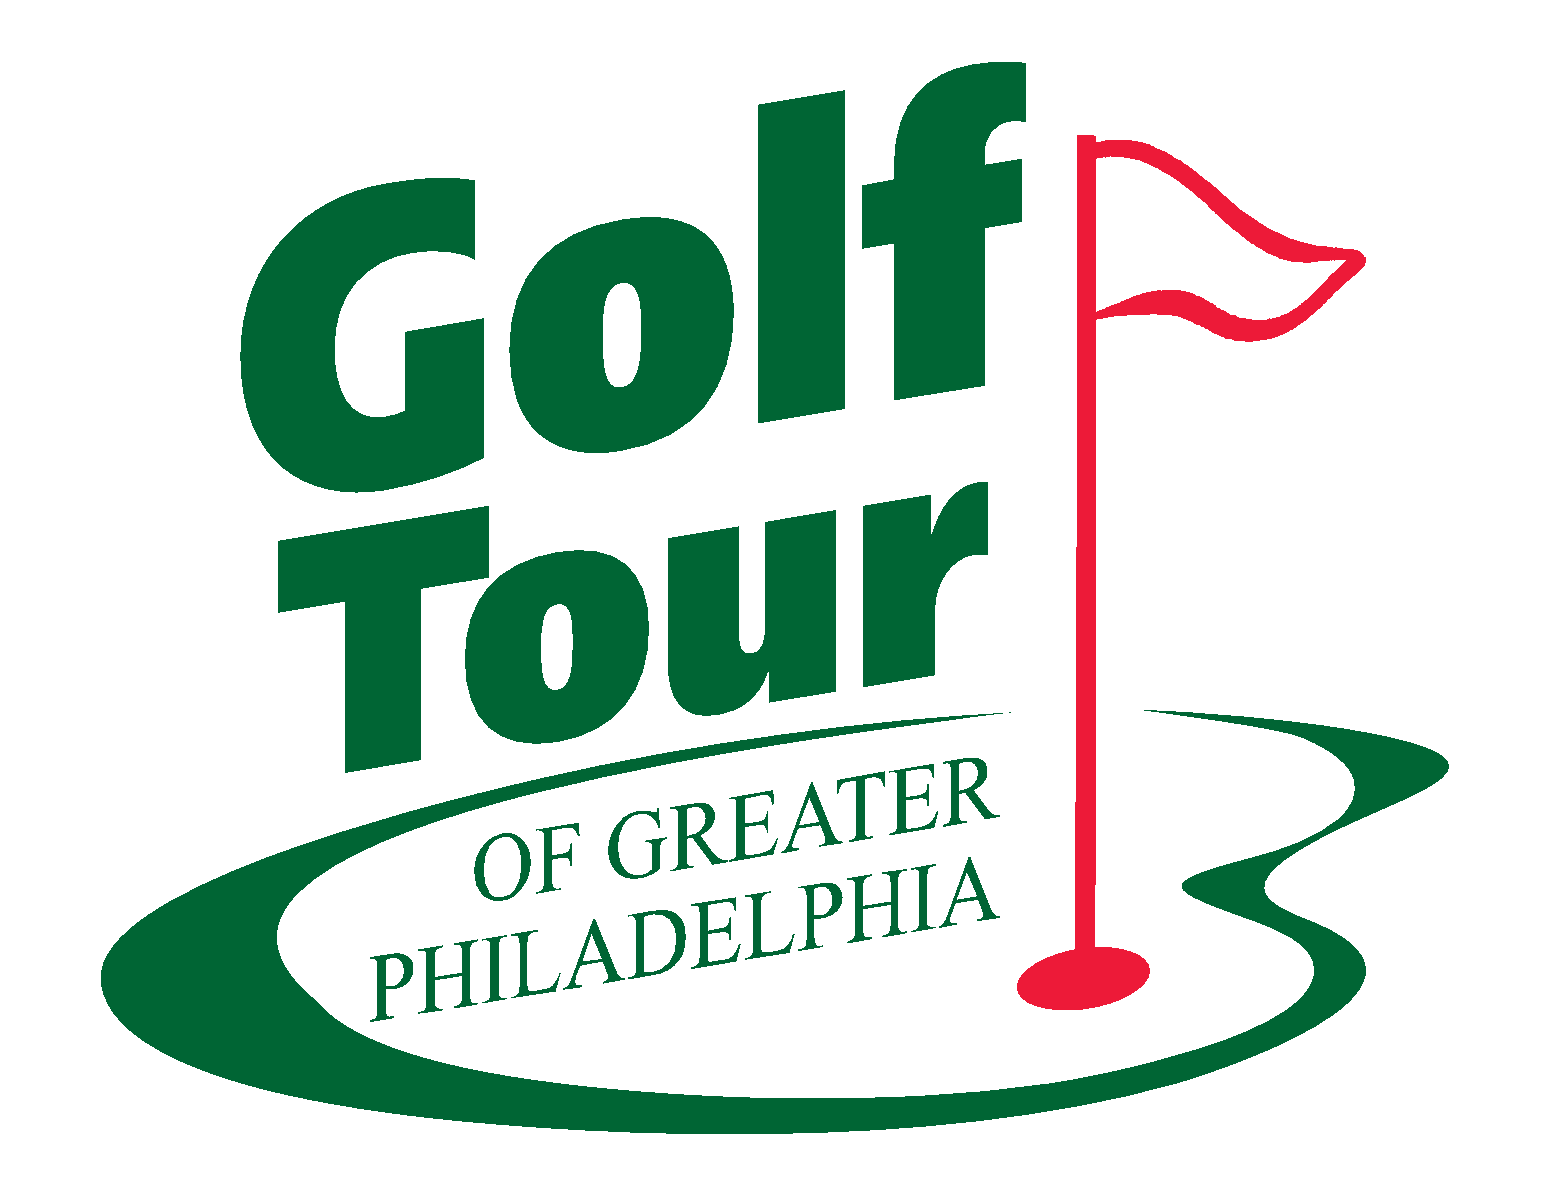 Women's Golf Association of Philadelphia